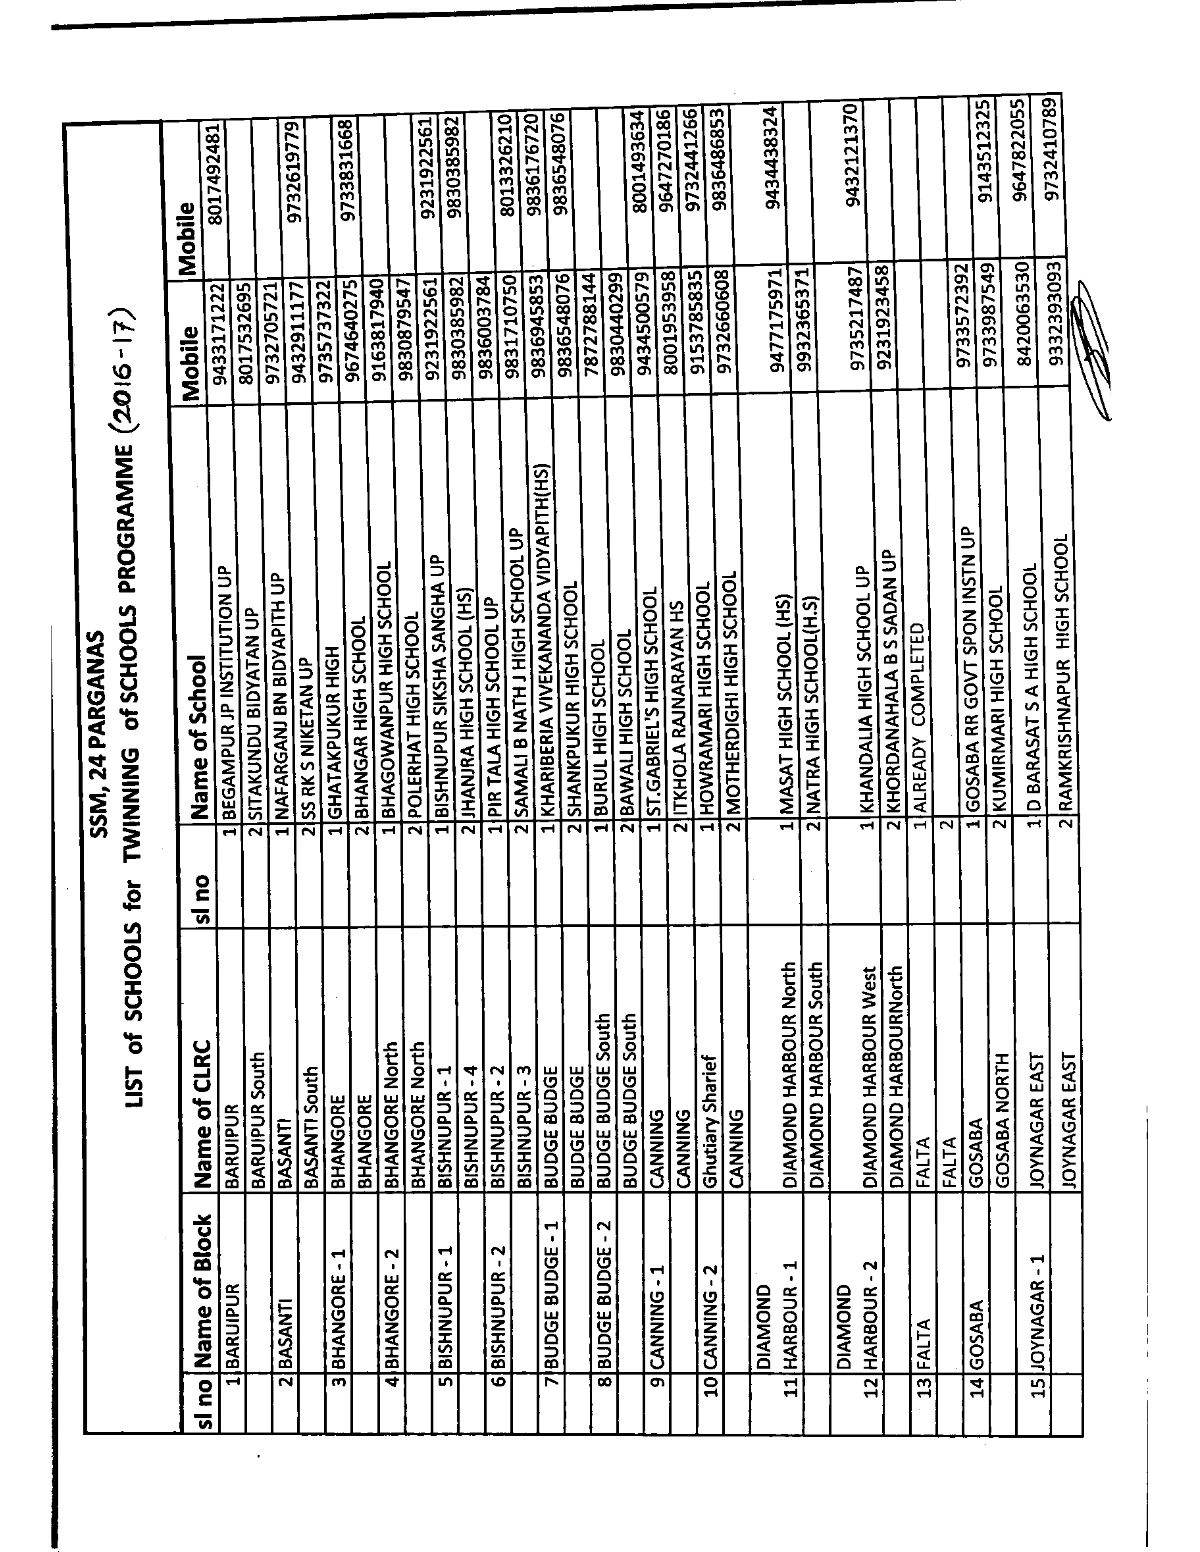 South 24 Parganas Primary School List